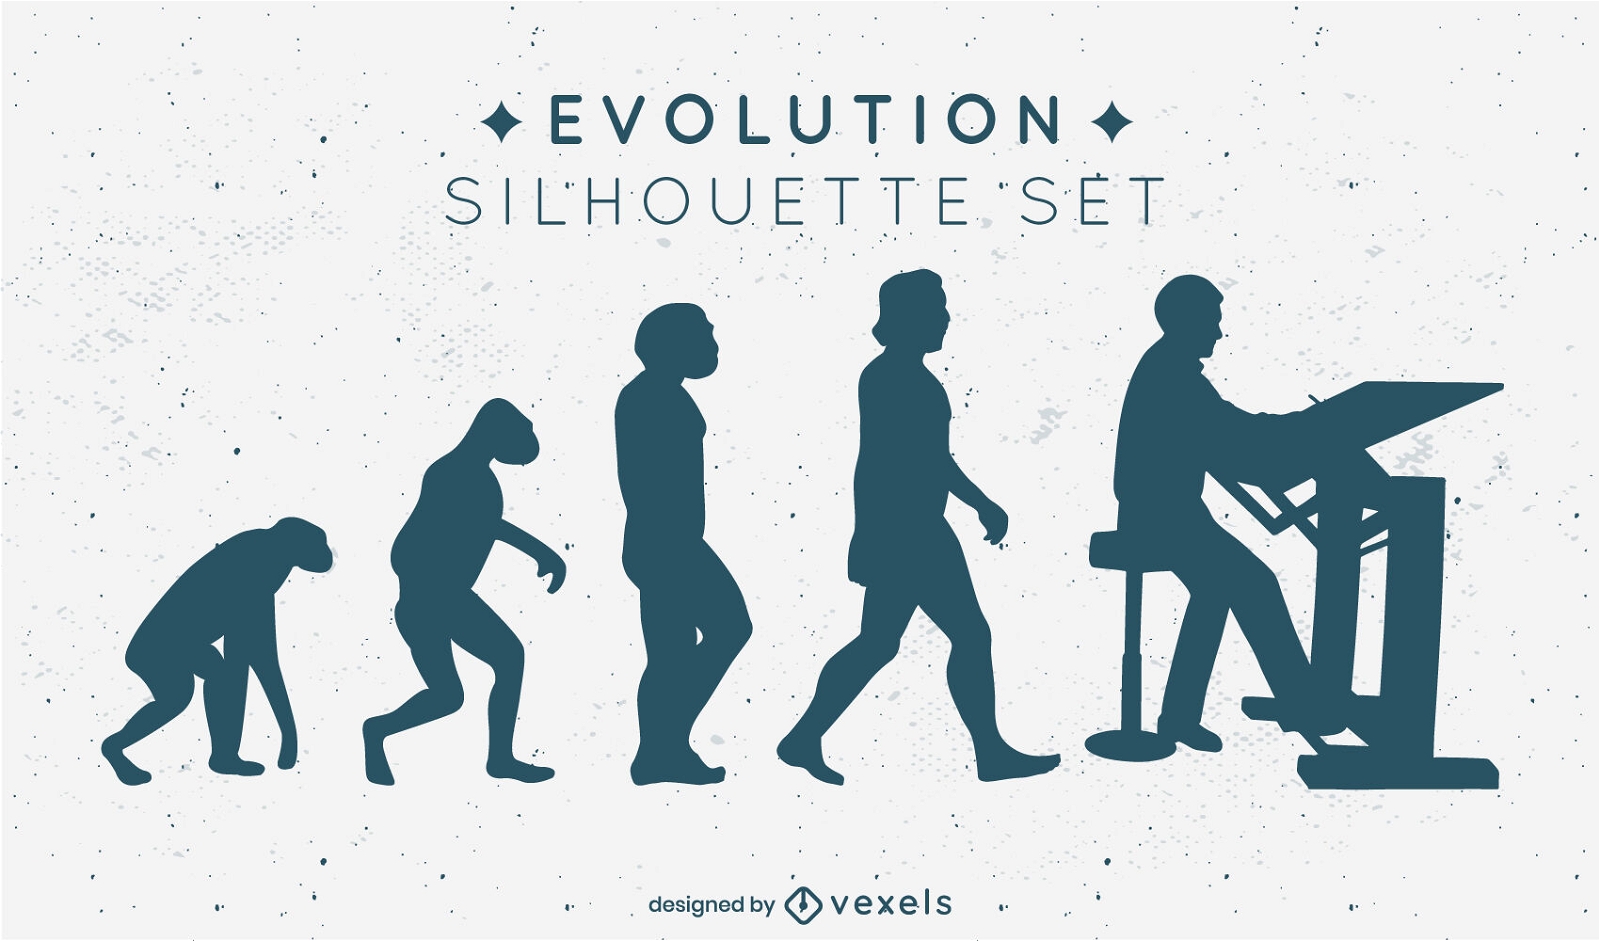 Artist evolution silhouette set